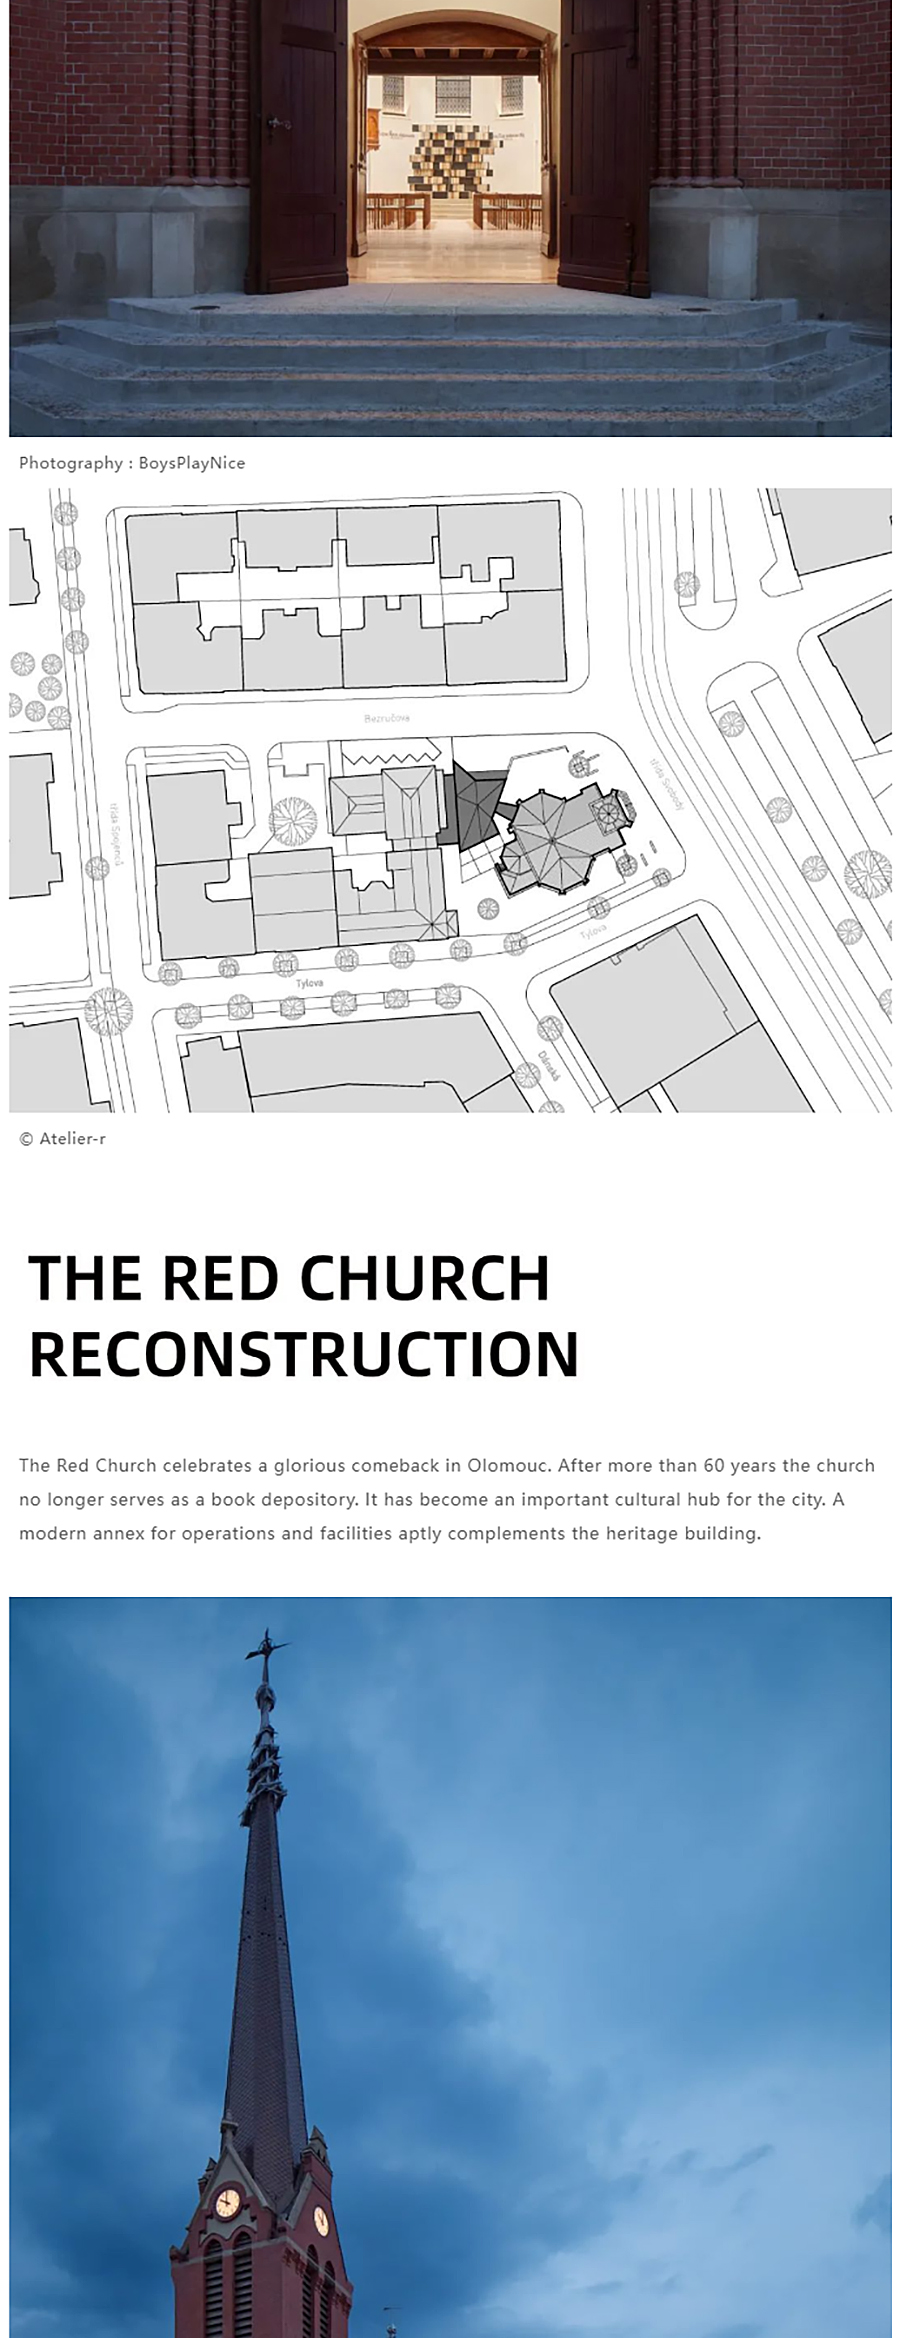 Renewal-Zone：复兴一座小众城市的新哥特式教堂︱捷克奥洛穆茨红教堂_0013_图层-14 拷贝.jpg